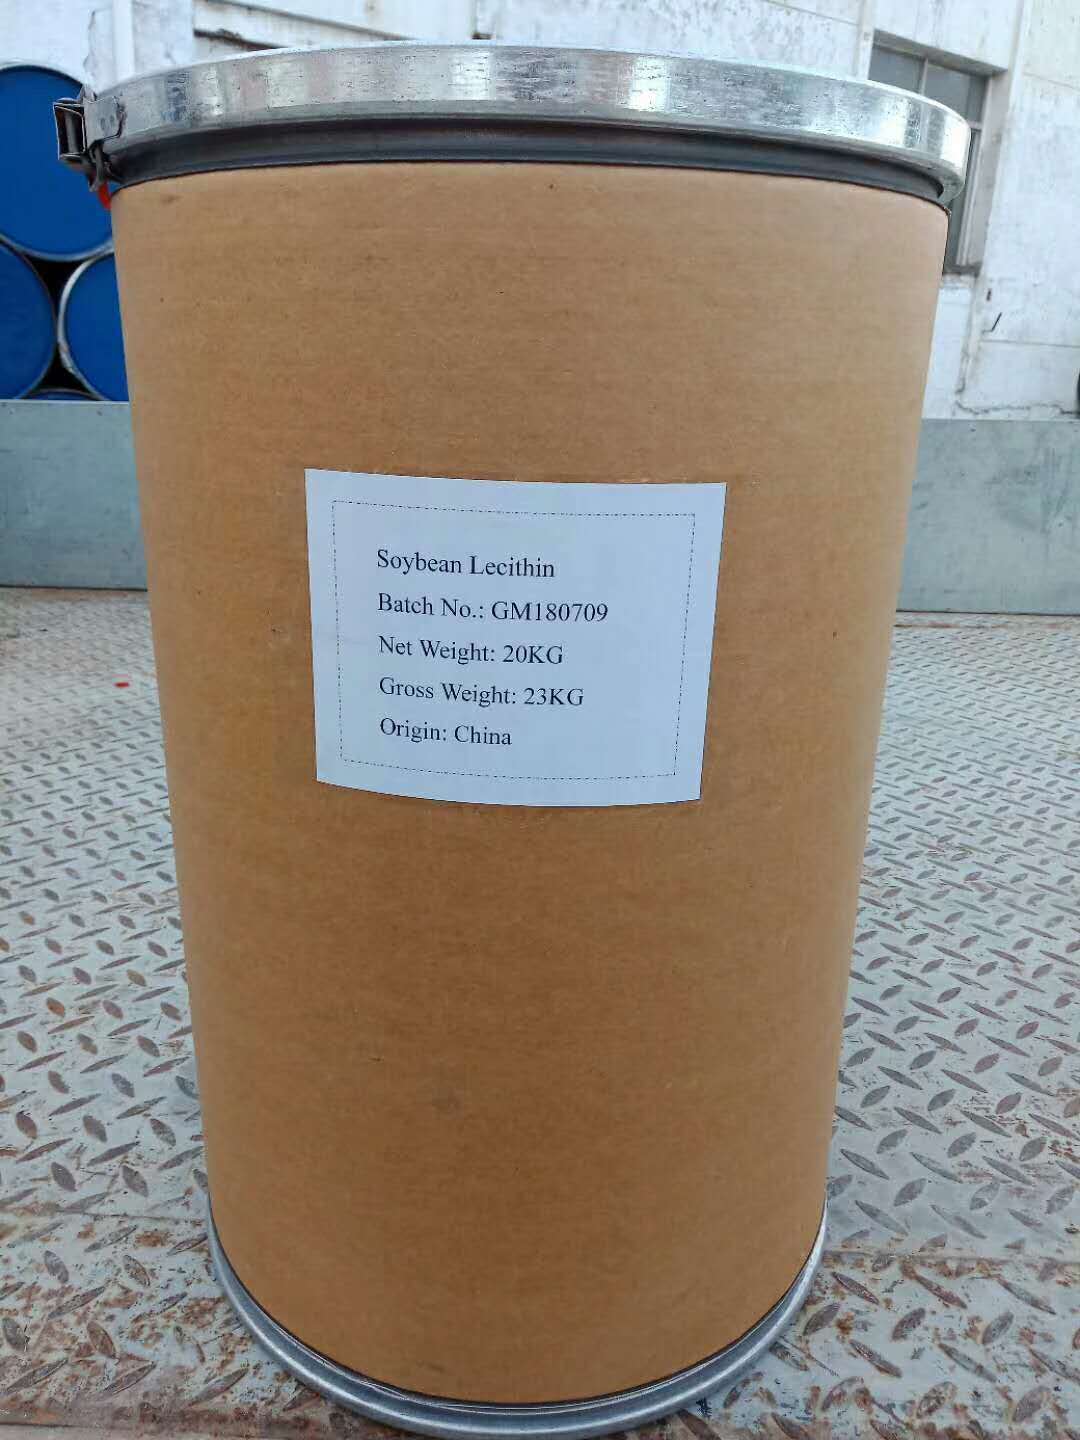 Soya lecithin powder package